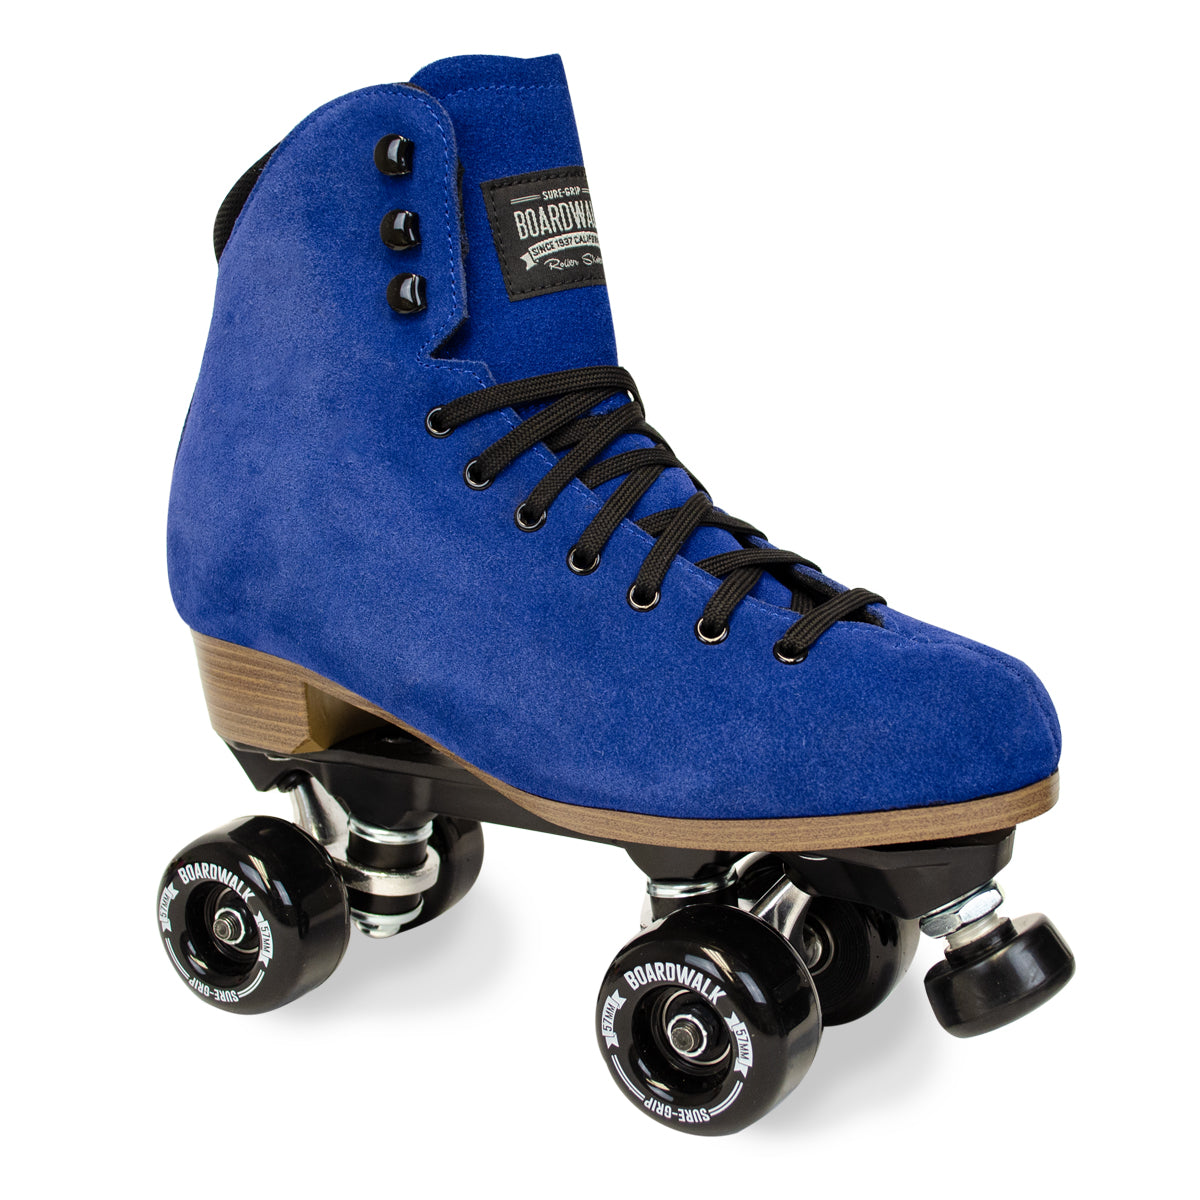 Sure-Grip boardwalk plus roller skate